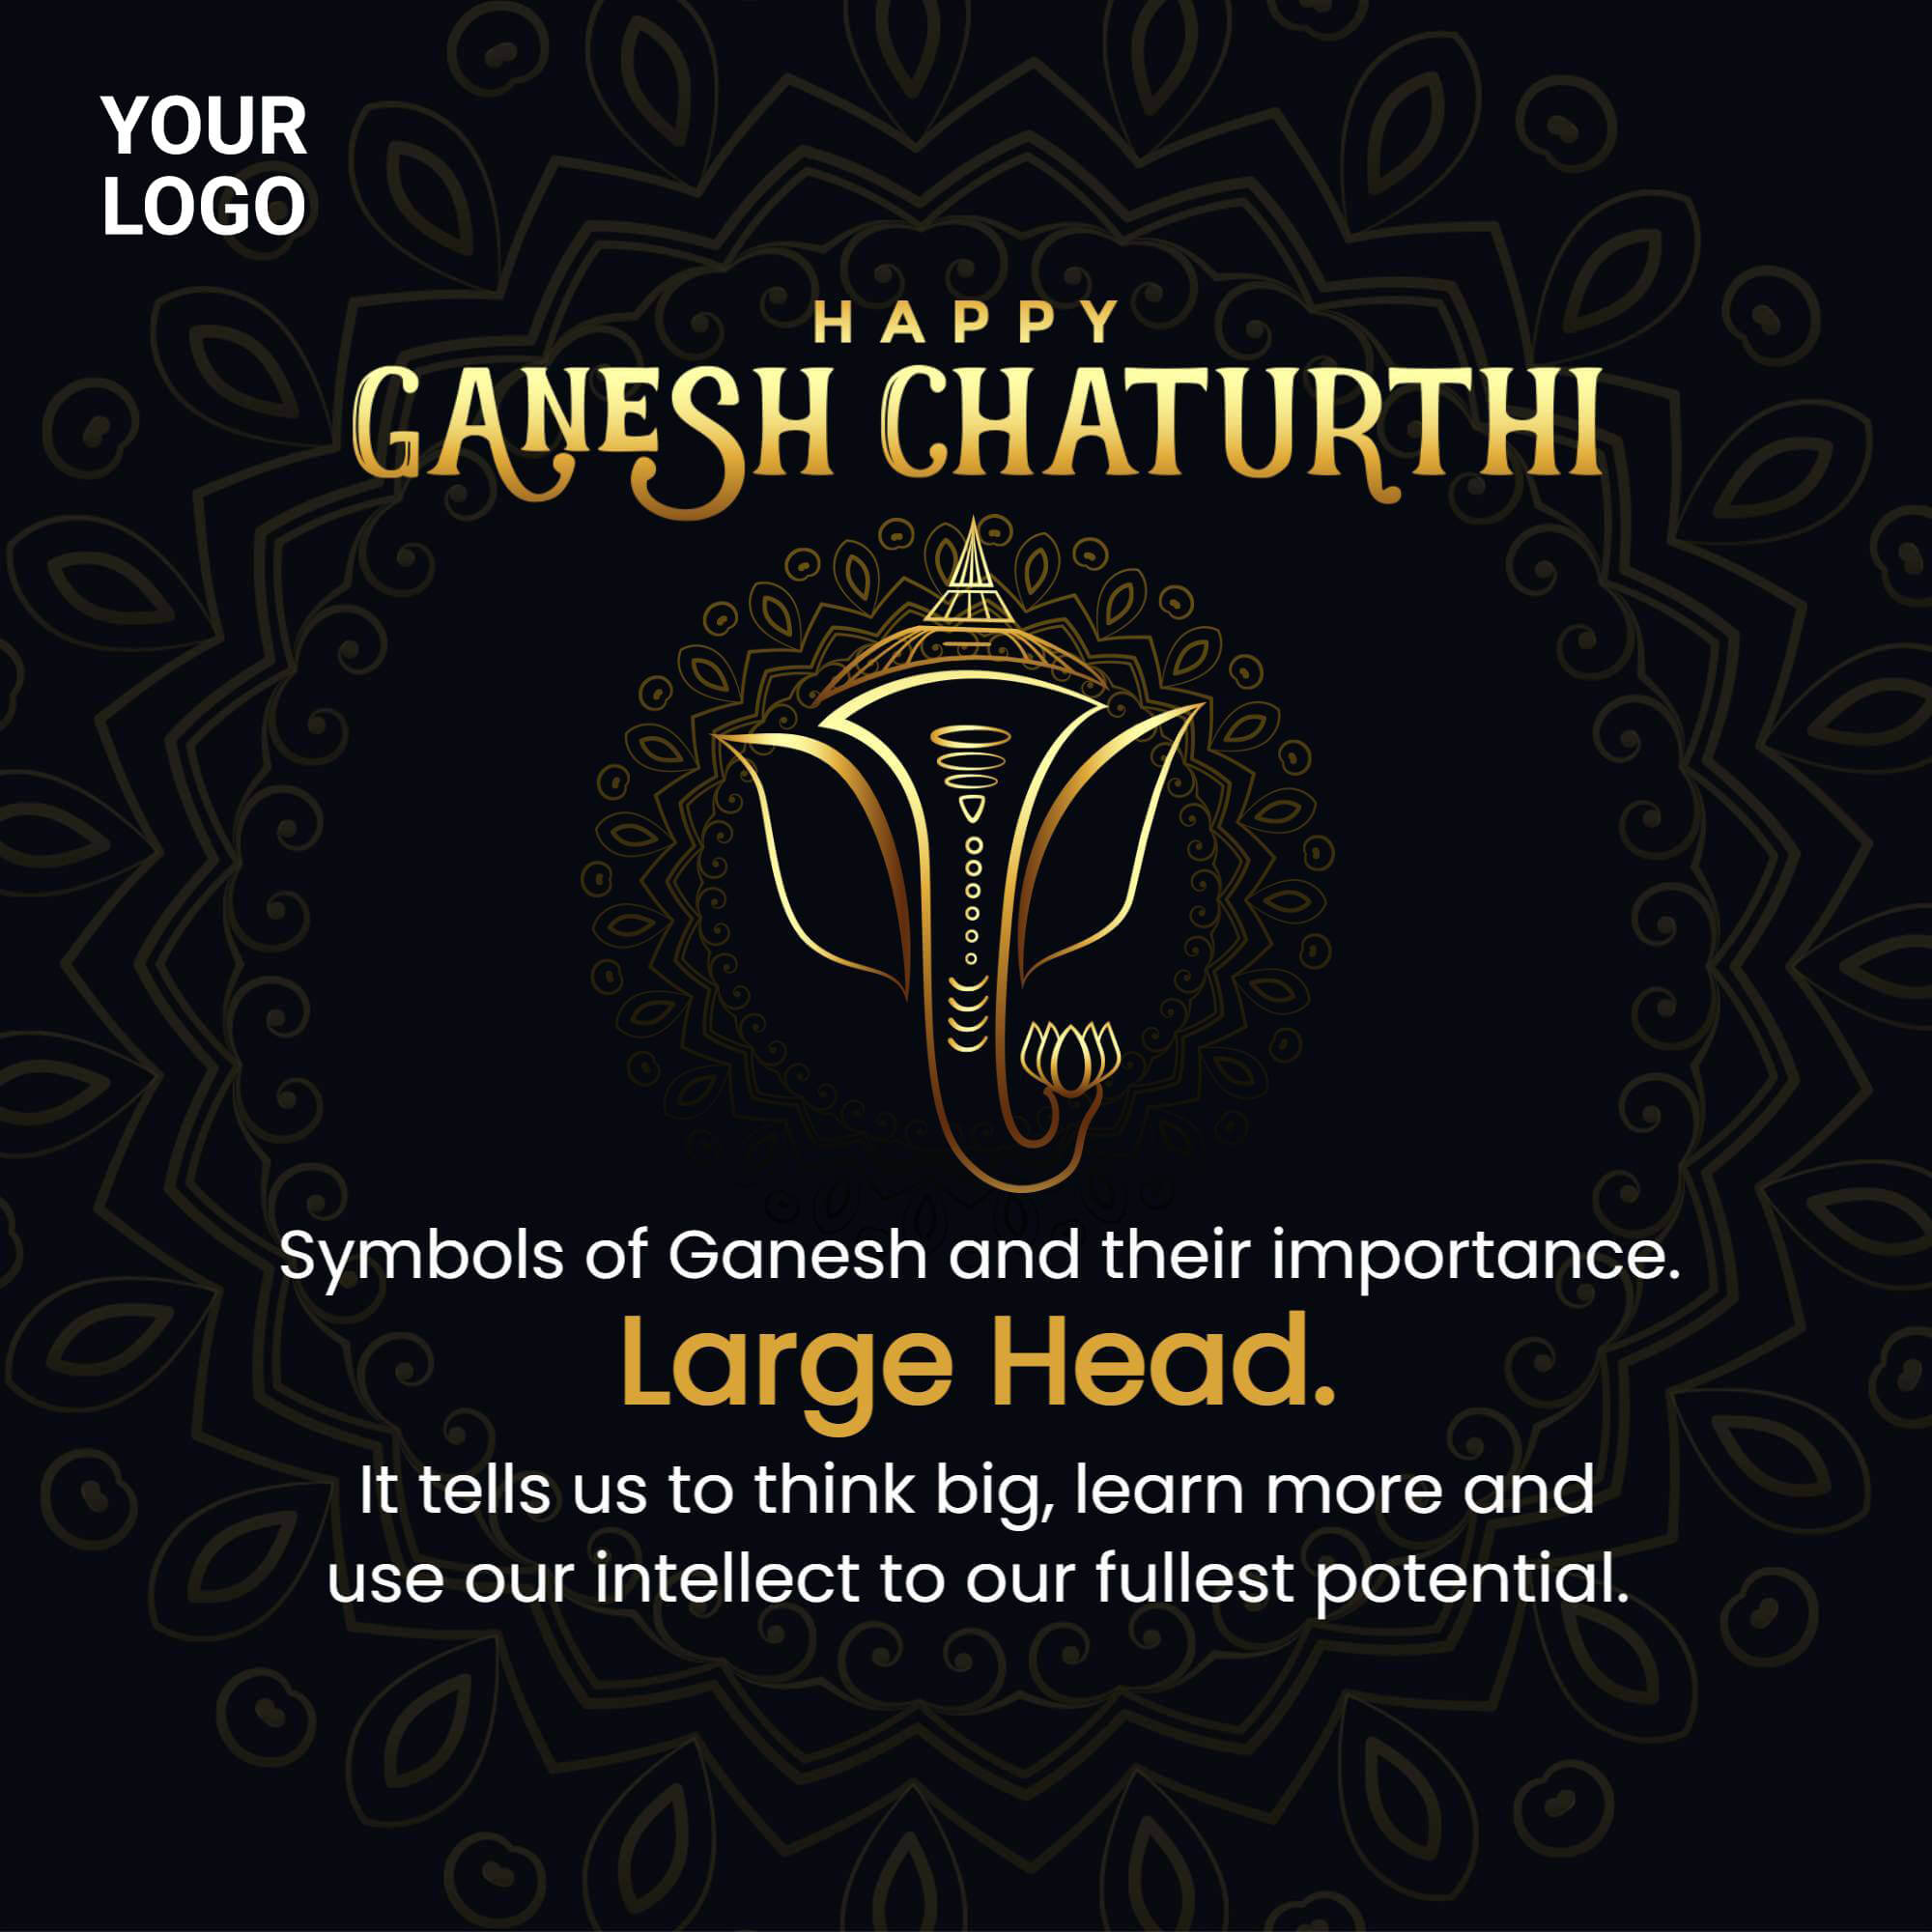 Ganesh Chaturthi Image Maker